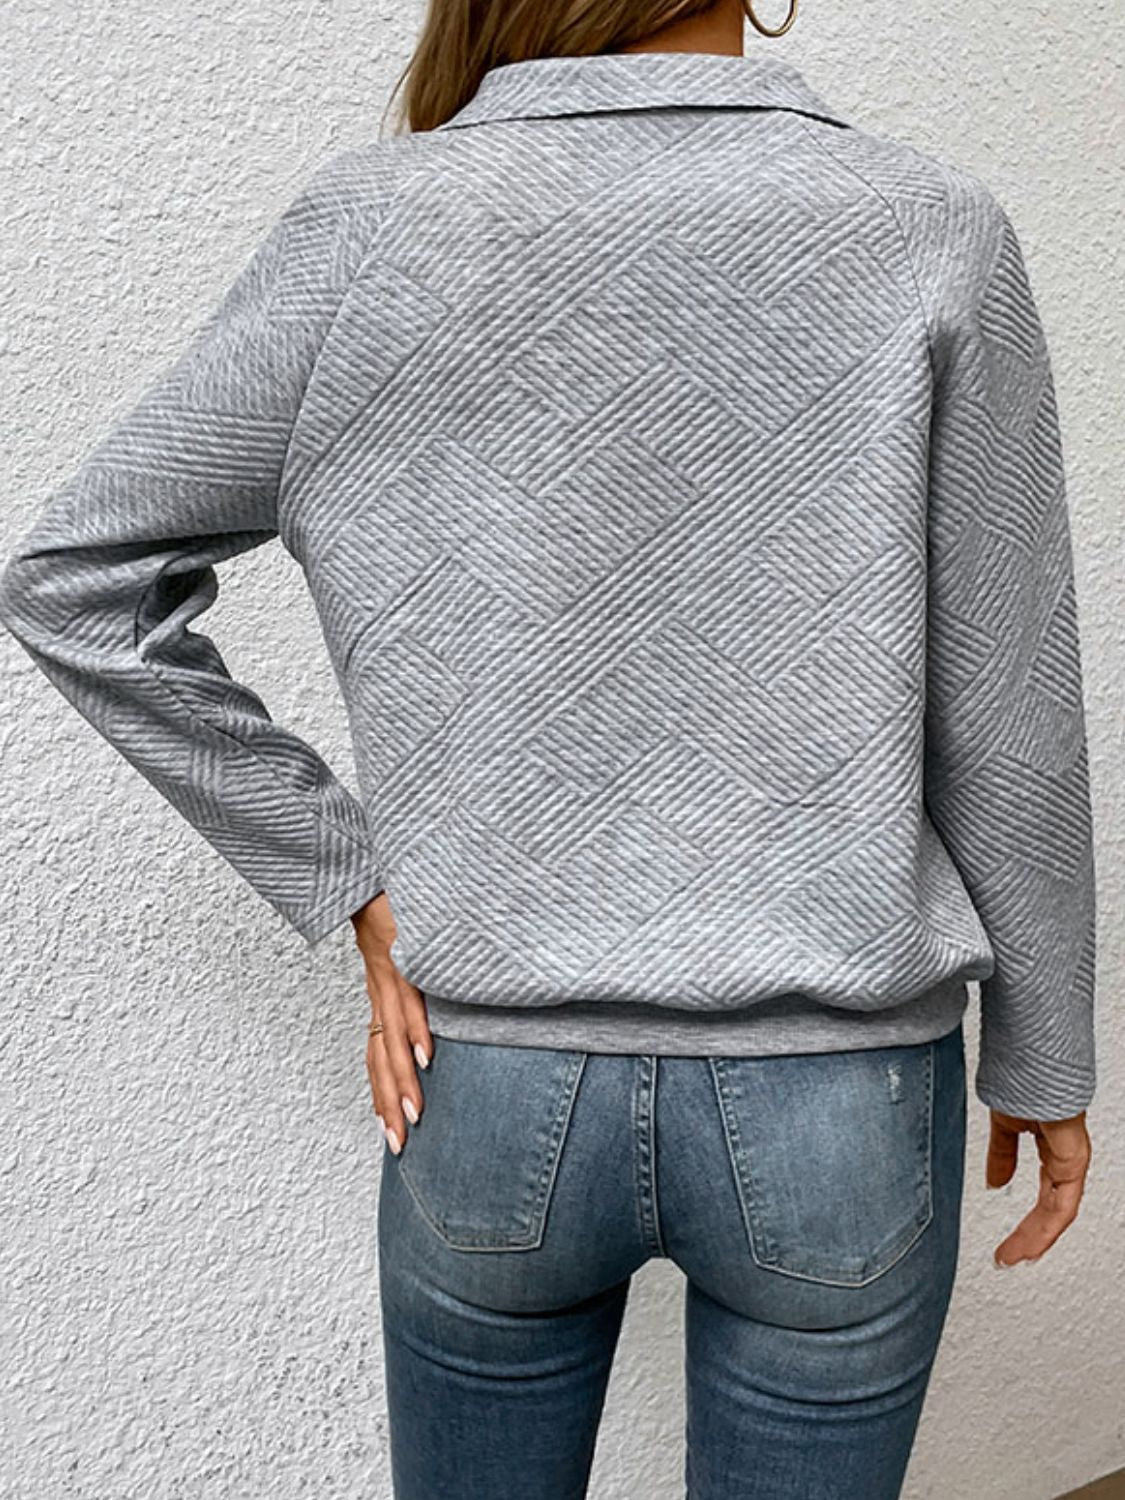 Raglan Sleeve Collared Neck Sweatshirt with Pocket Print on any thing USA/STOD clothes